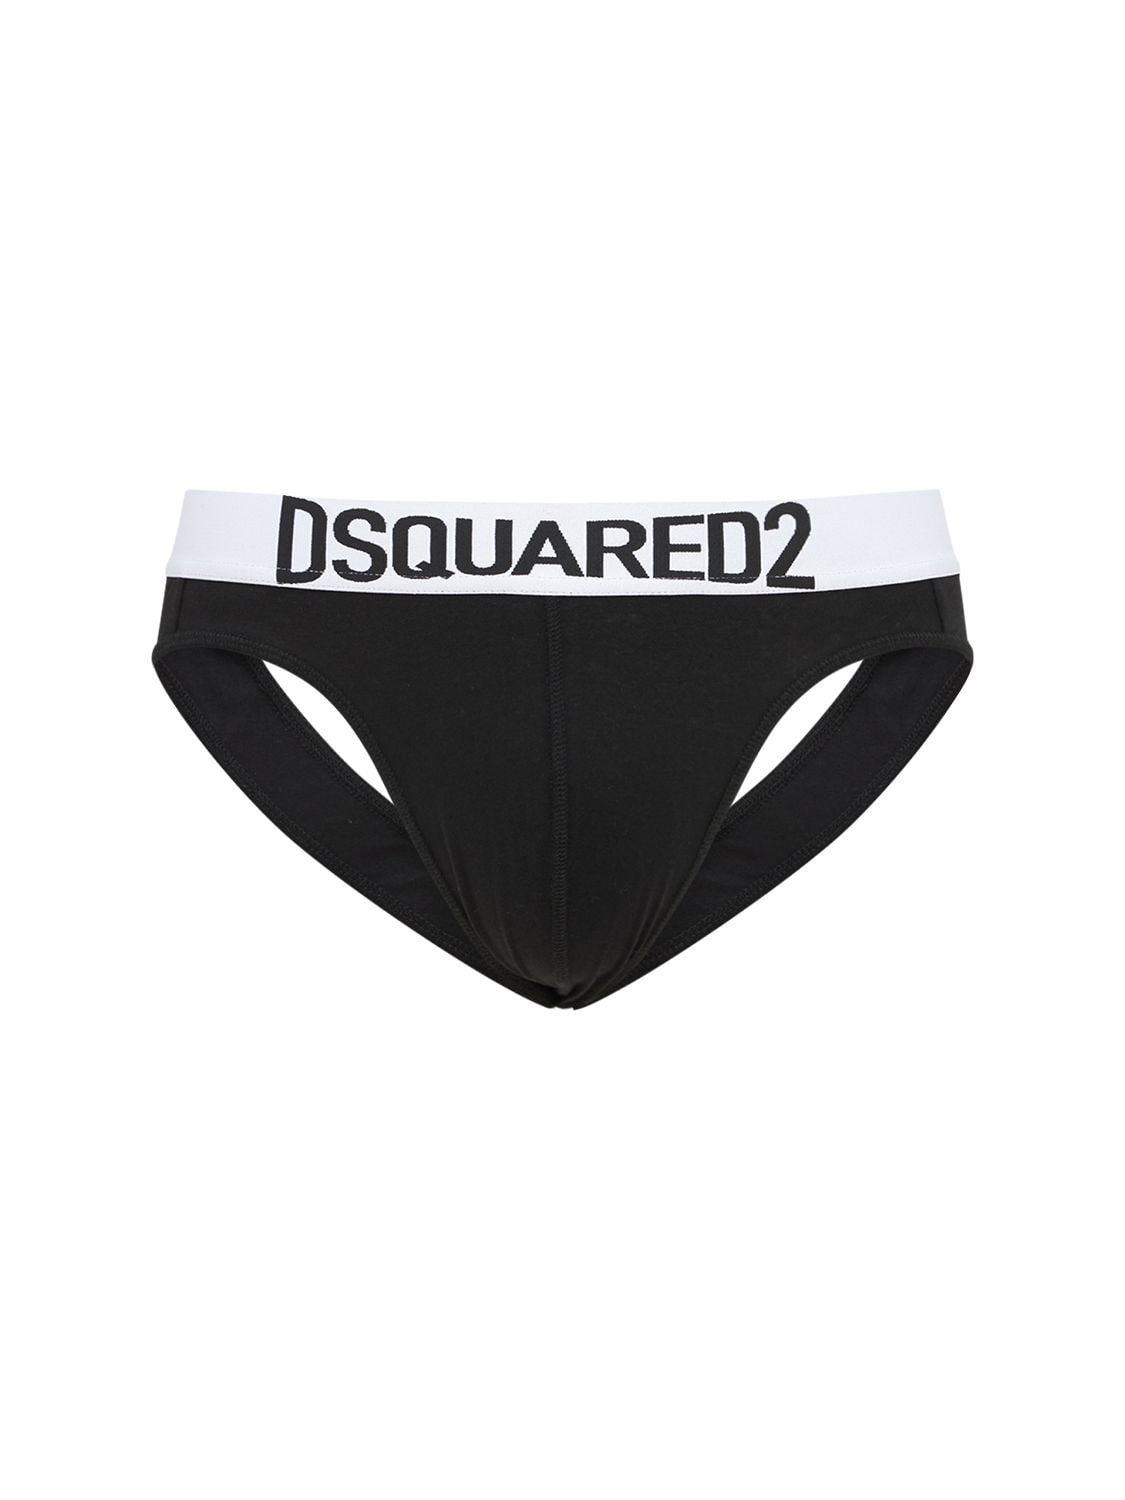 Dsquared2 Underwear - Logo cotton jockstrap briefs - Black | Luisaviaroma